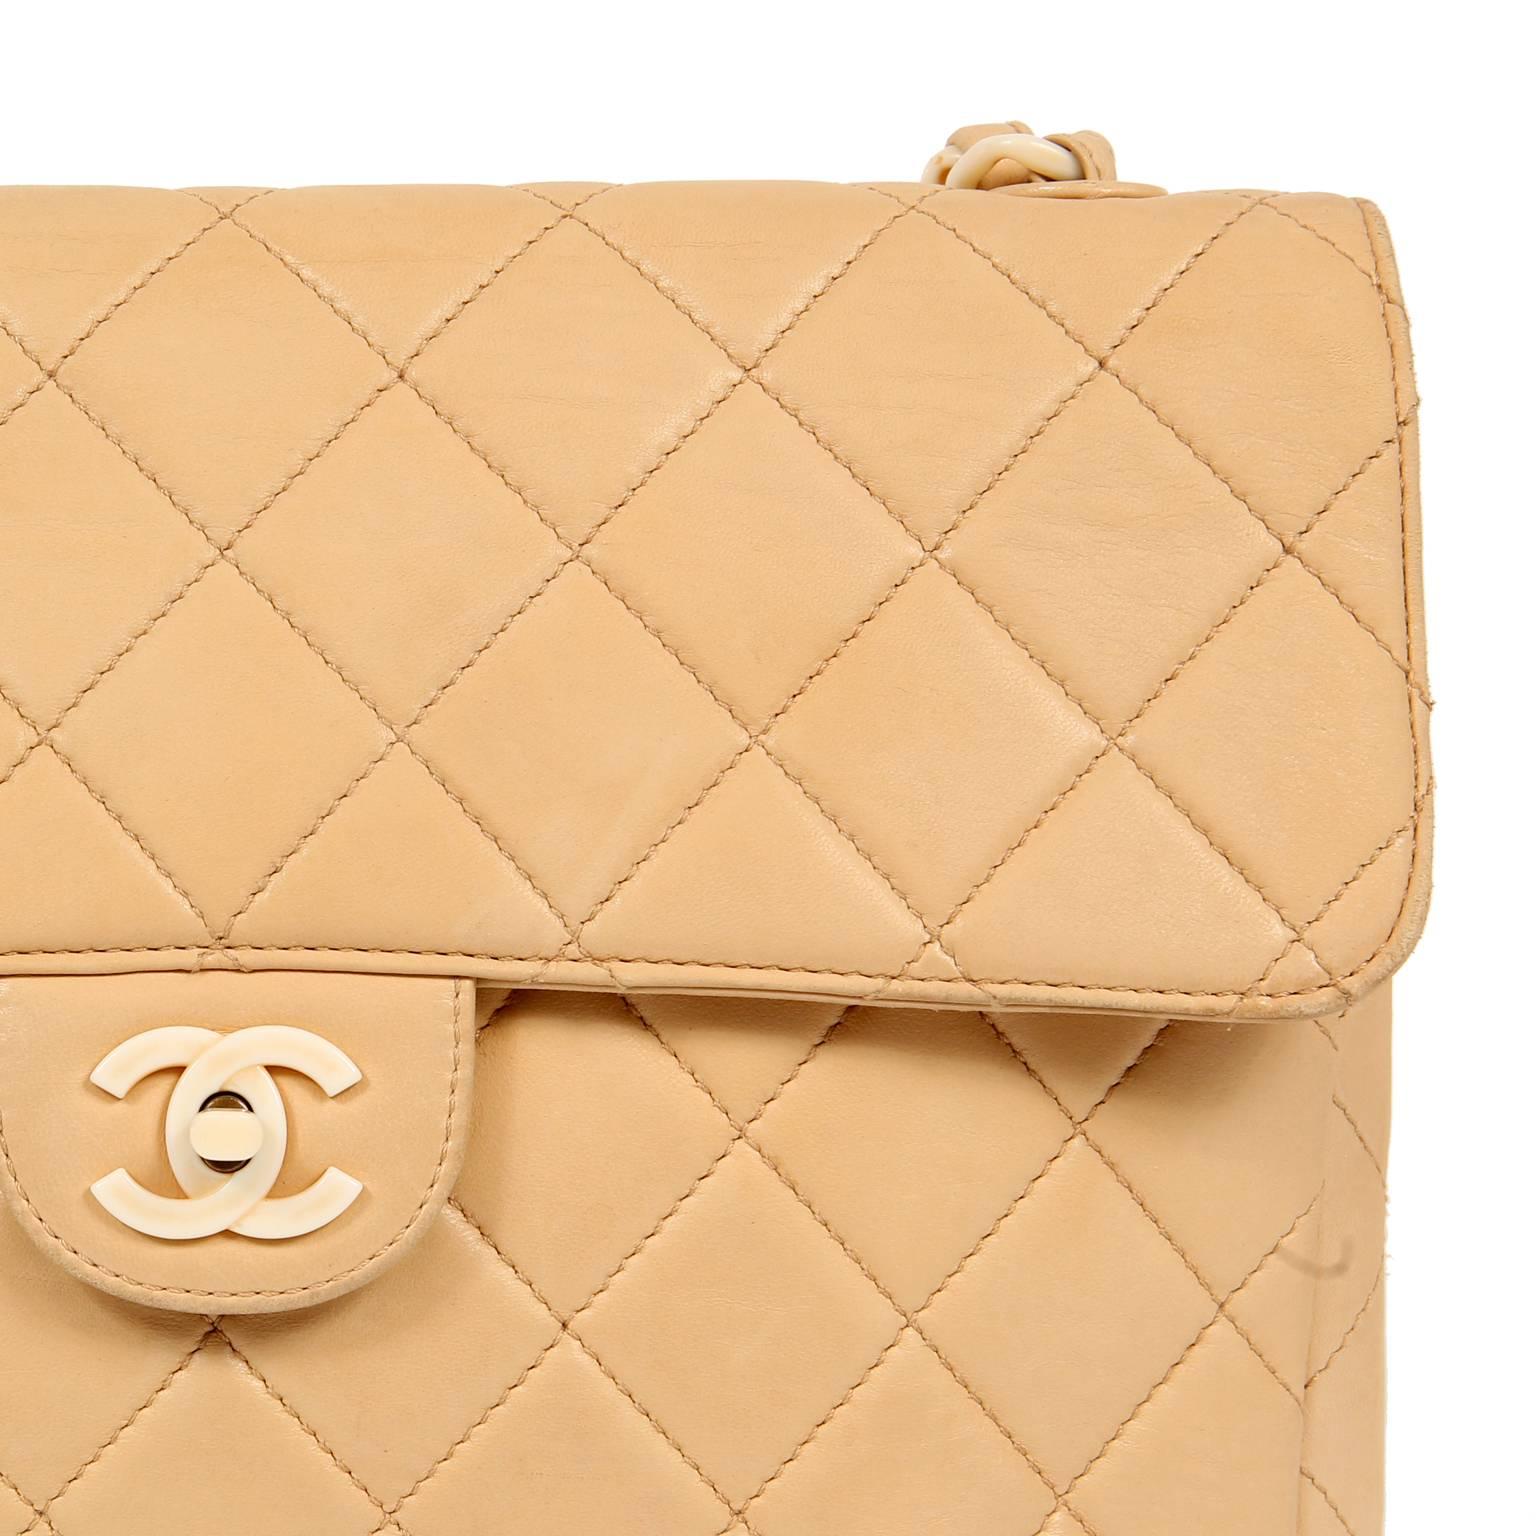 Chanel Beige Lambskin and Bakelite Vintage Classic Flap Bag 2